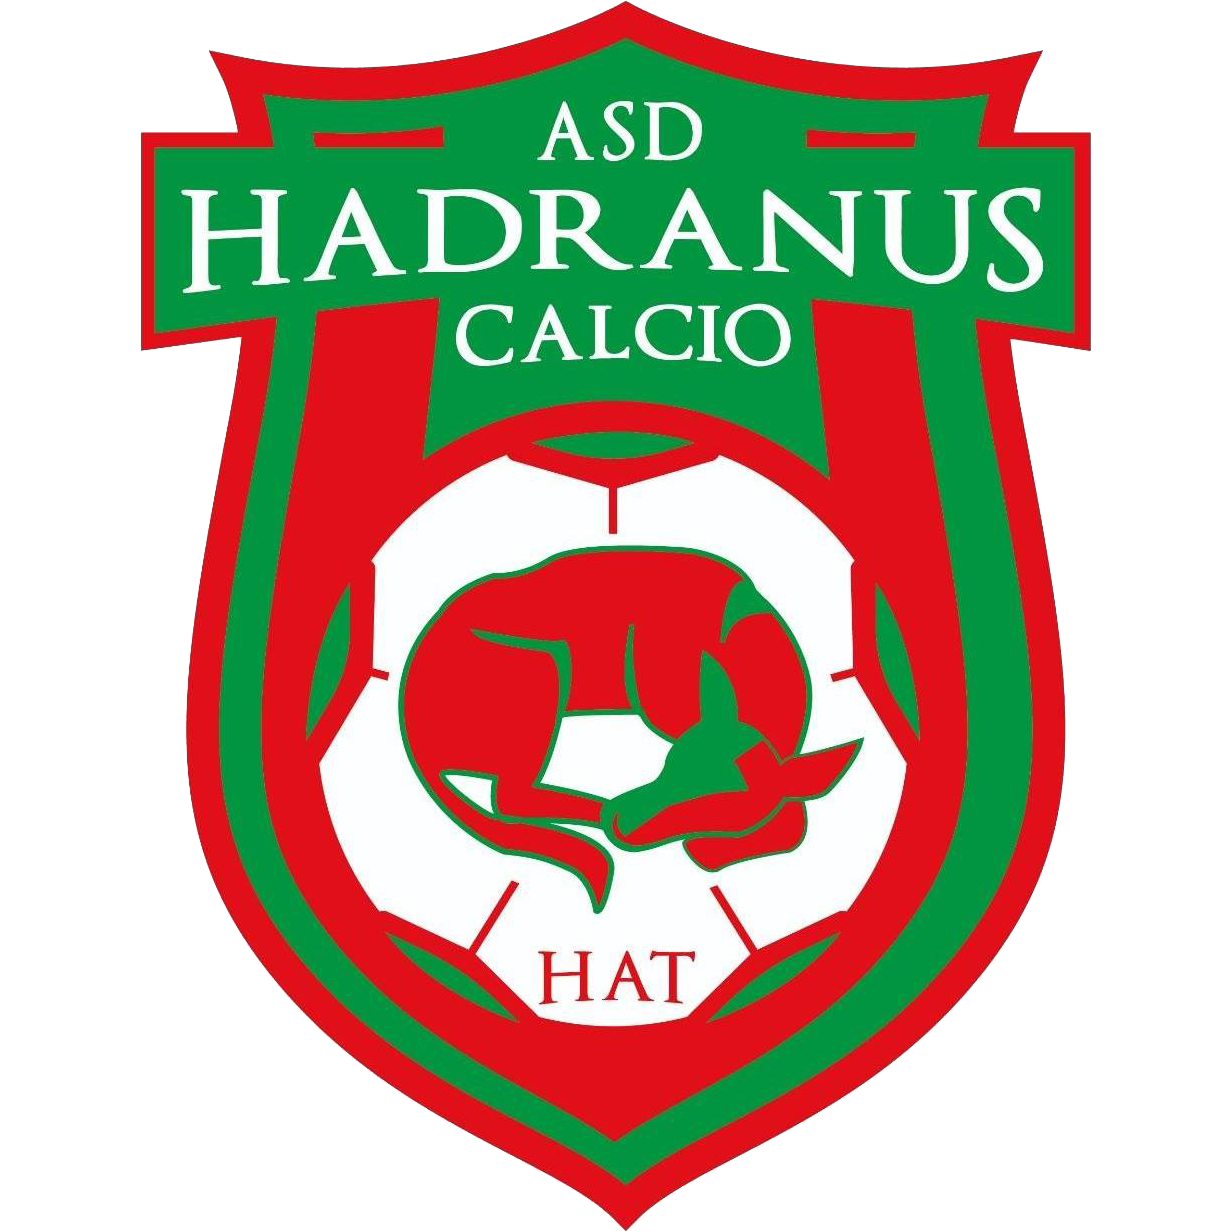 ASD Hadranus Calcio